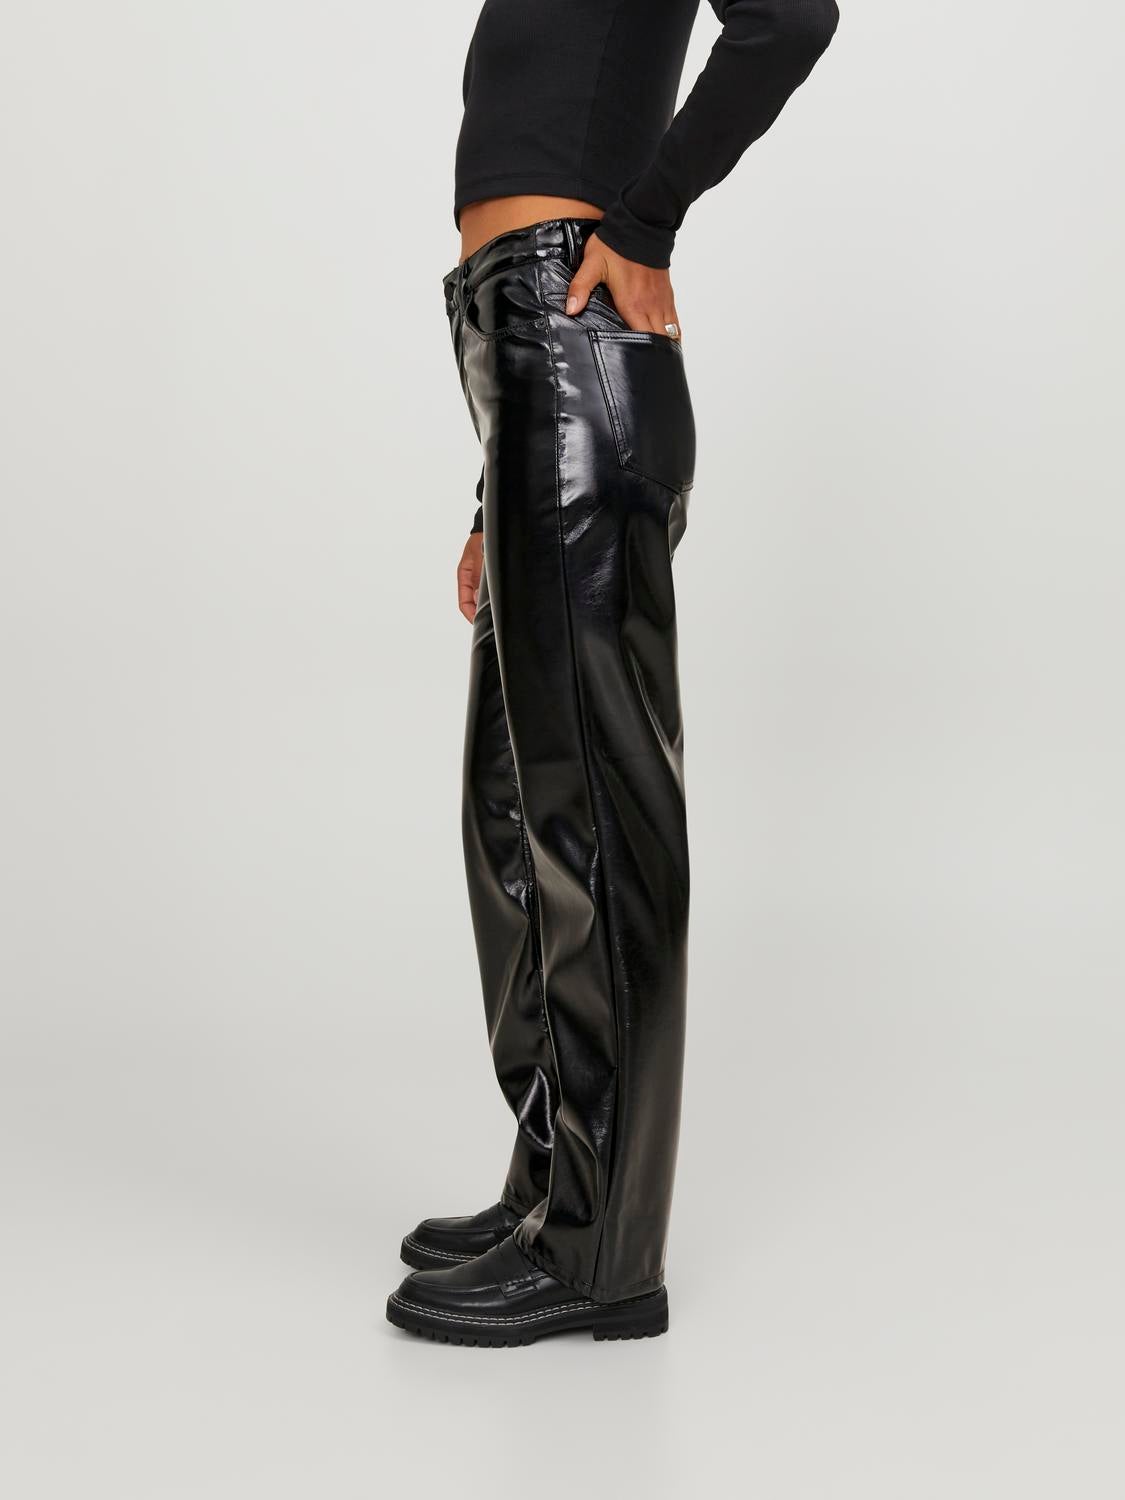 Idopy Men`s Cool Faux Leather Trousers Loose Style PU Cargo Pants 30 Black  : Amazon.co.uk: Fashion